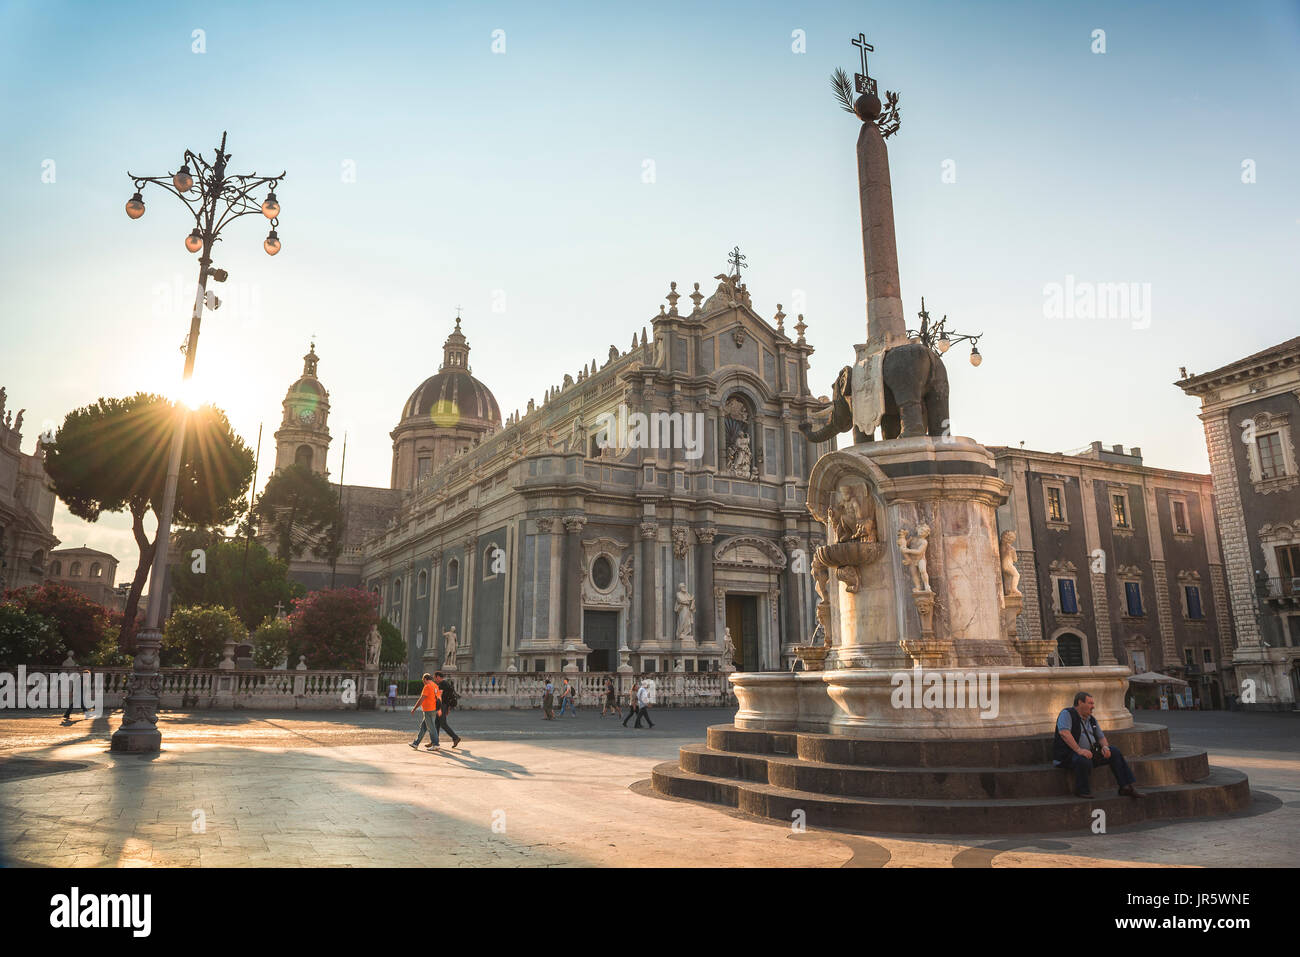 Catania Sizilien piazza, Blick auf die Piazza del Duomo mit dem Elefantenbrunnen (Fontana dell'Elefante) im Zentrum der Stadt Catania, Sizilien. Stockfoto